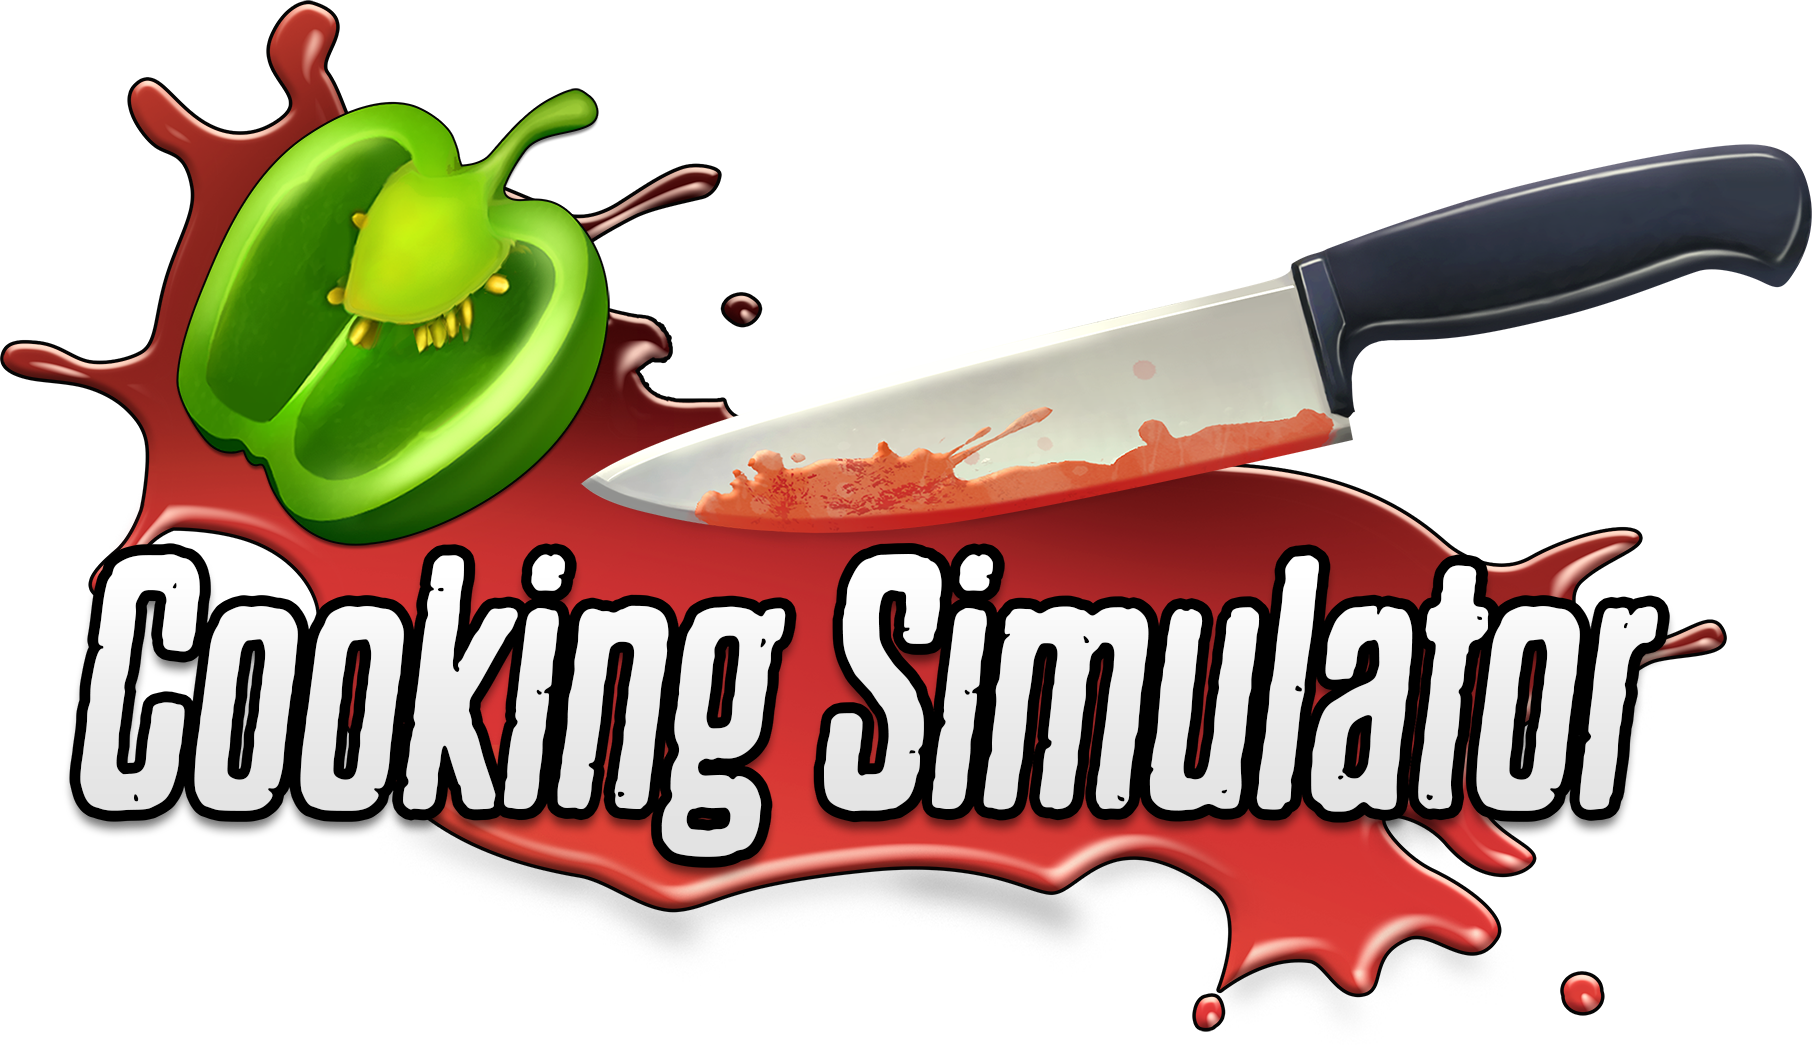 Cooking Simulator, Cooking Simulator Wiki